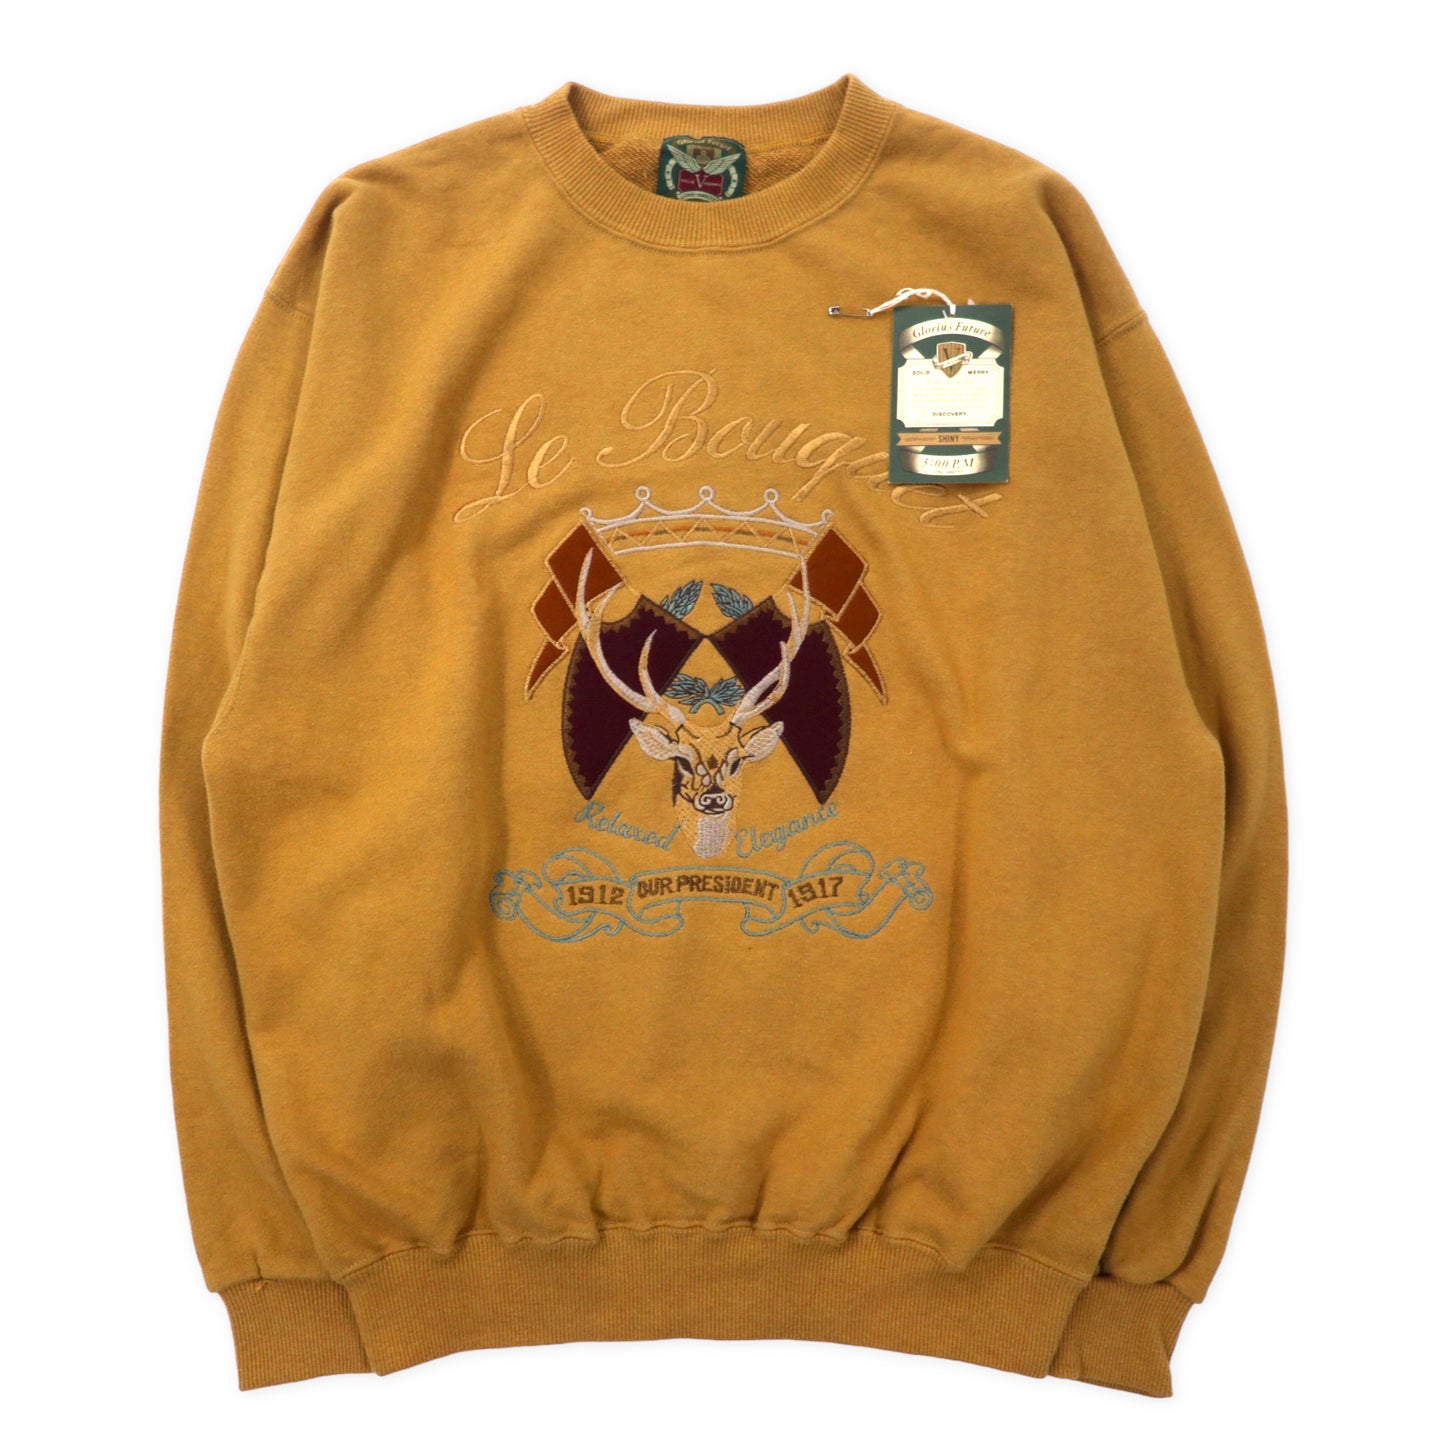 GLORIUS FUTURE Animal Embroidery Retro Sweatshirt M Beige Cotton Japan MADE  UNUSED